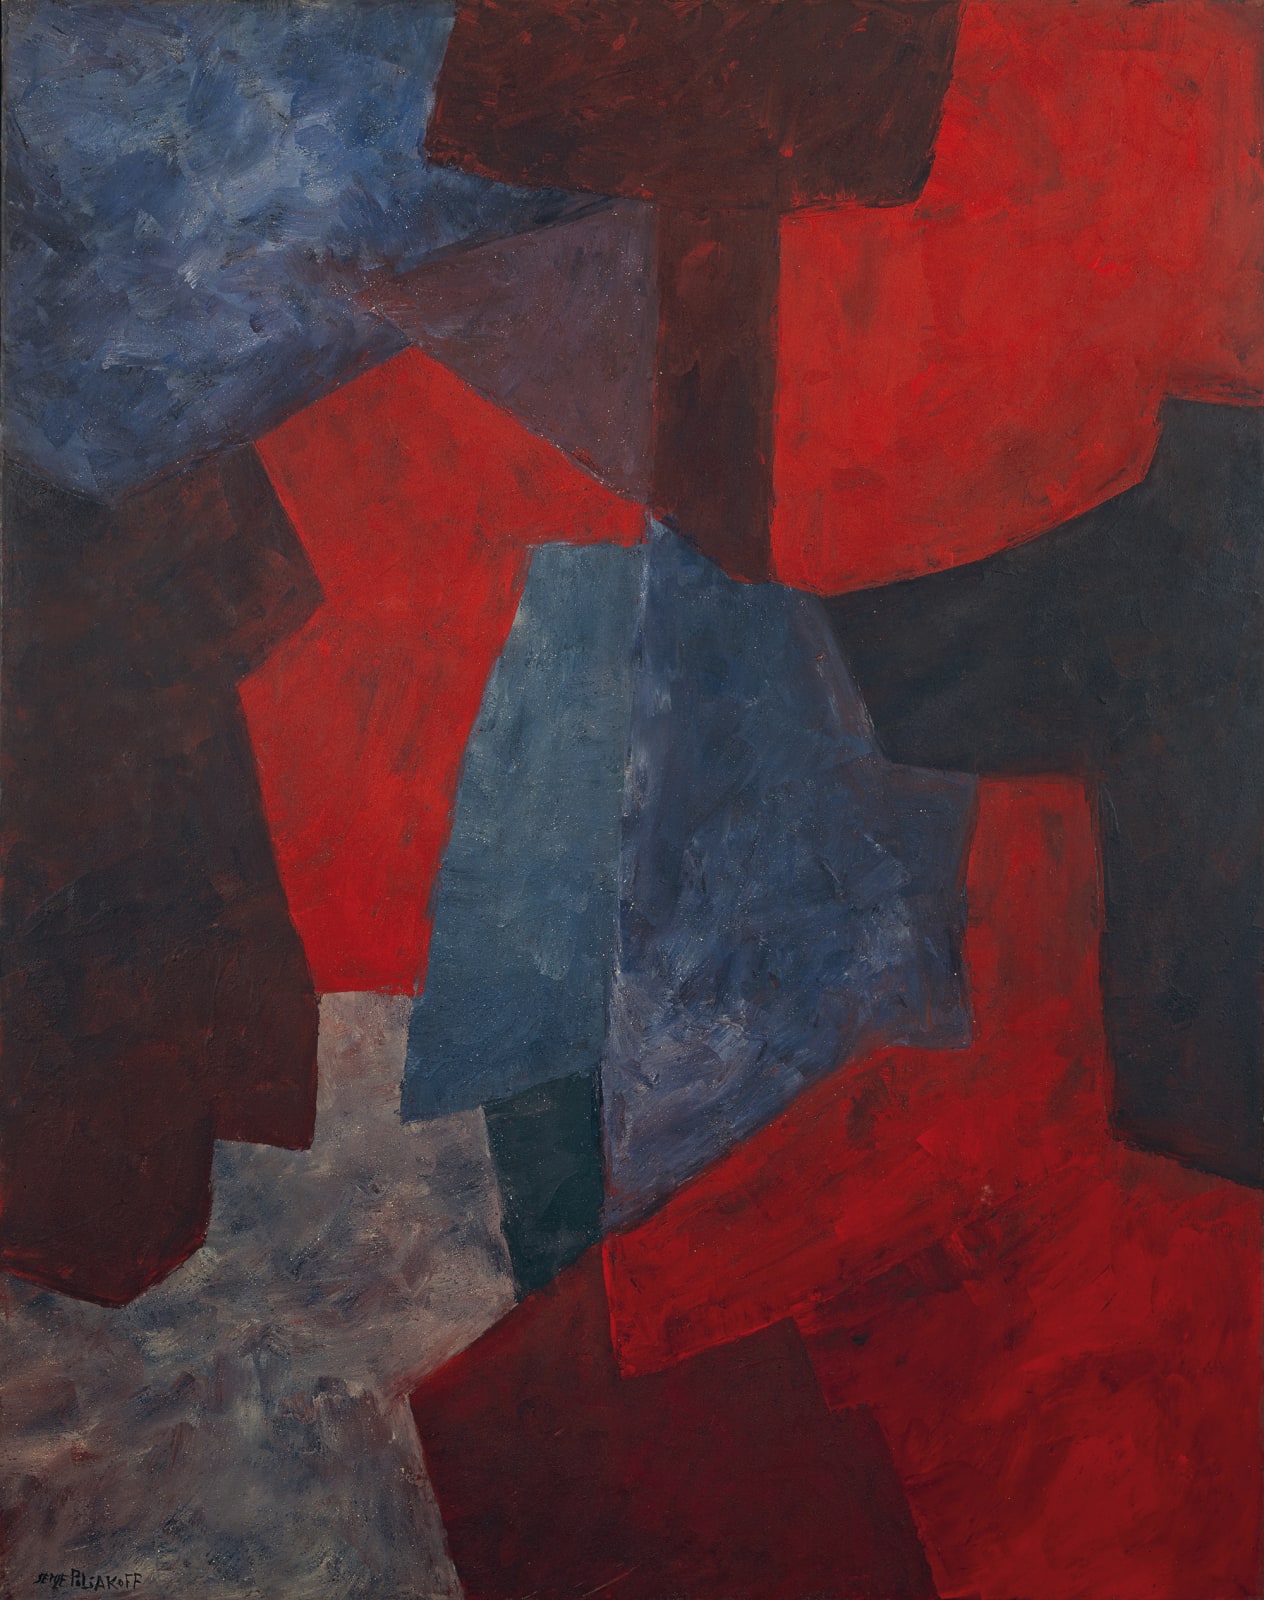 SERGE POLIAKOFF, Bleu rouge gris vert, 1962